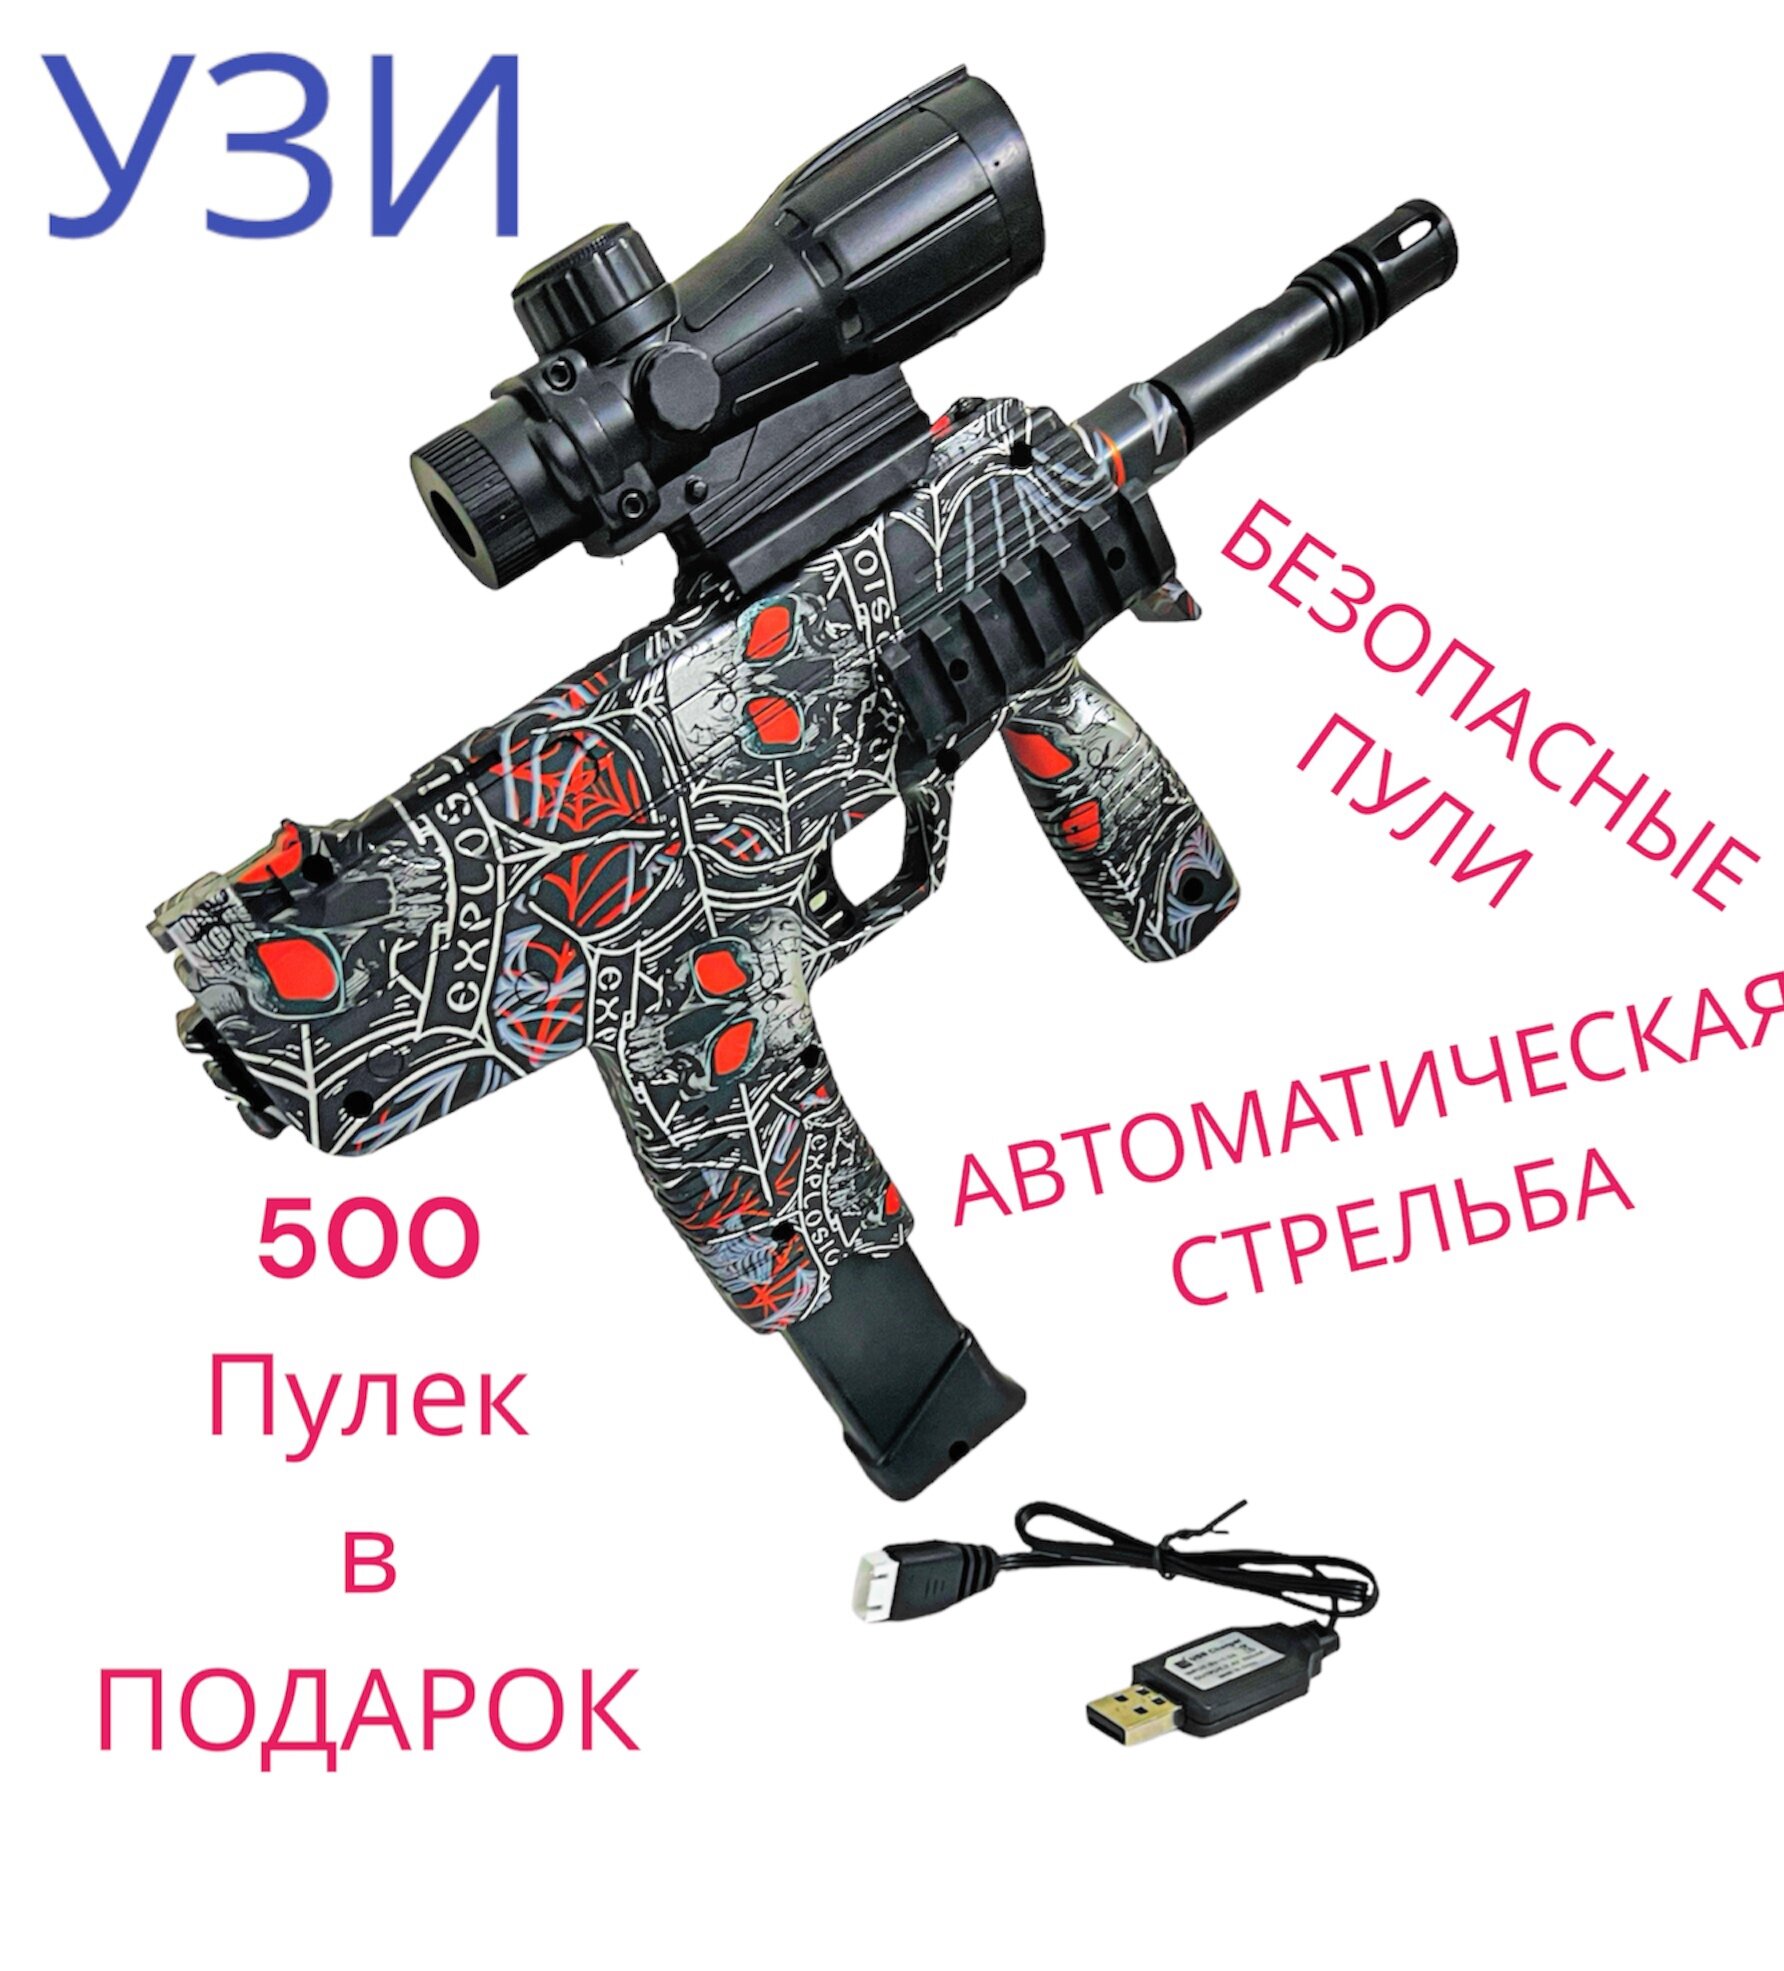 Детский электропневматический пистолет-пулемет "Узи" (Uzi) на аккумуляторе и гидрогелевых пулях